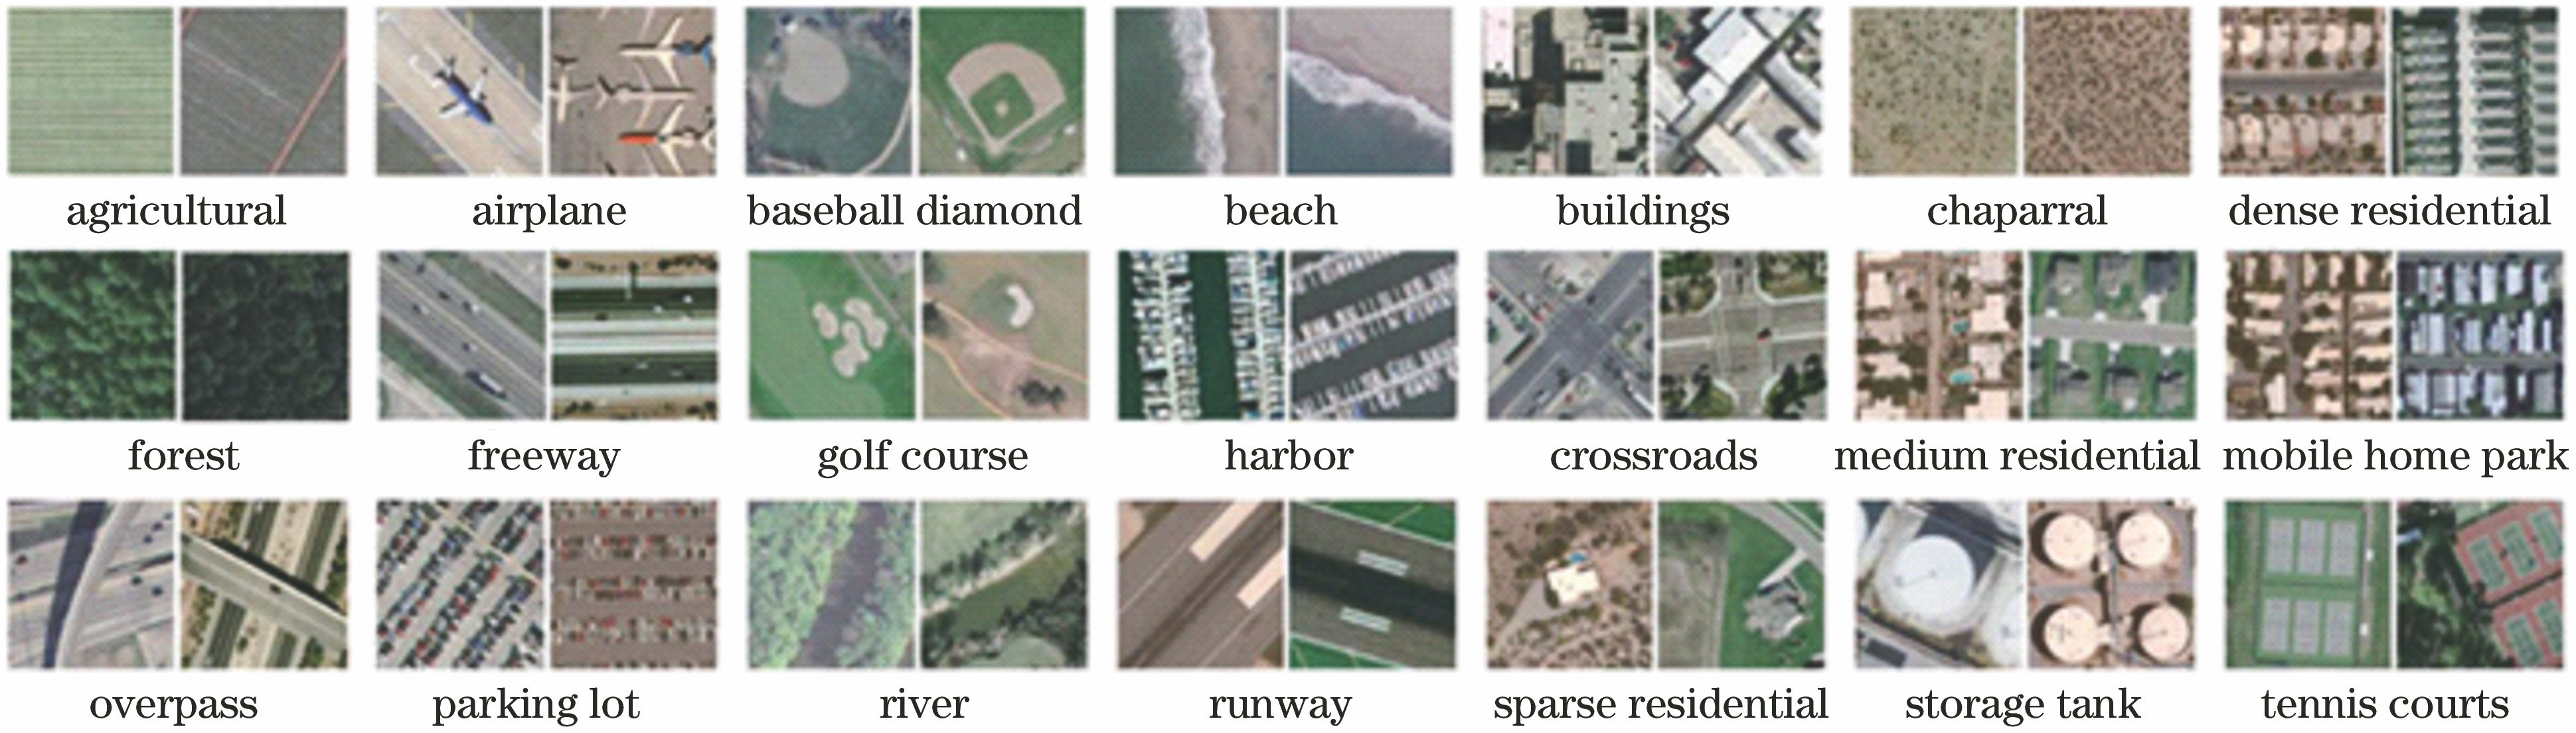 Sample images of UC-Merced dataset